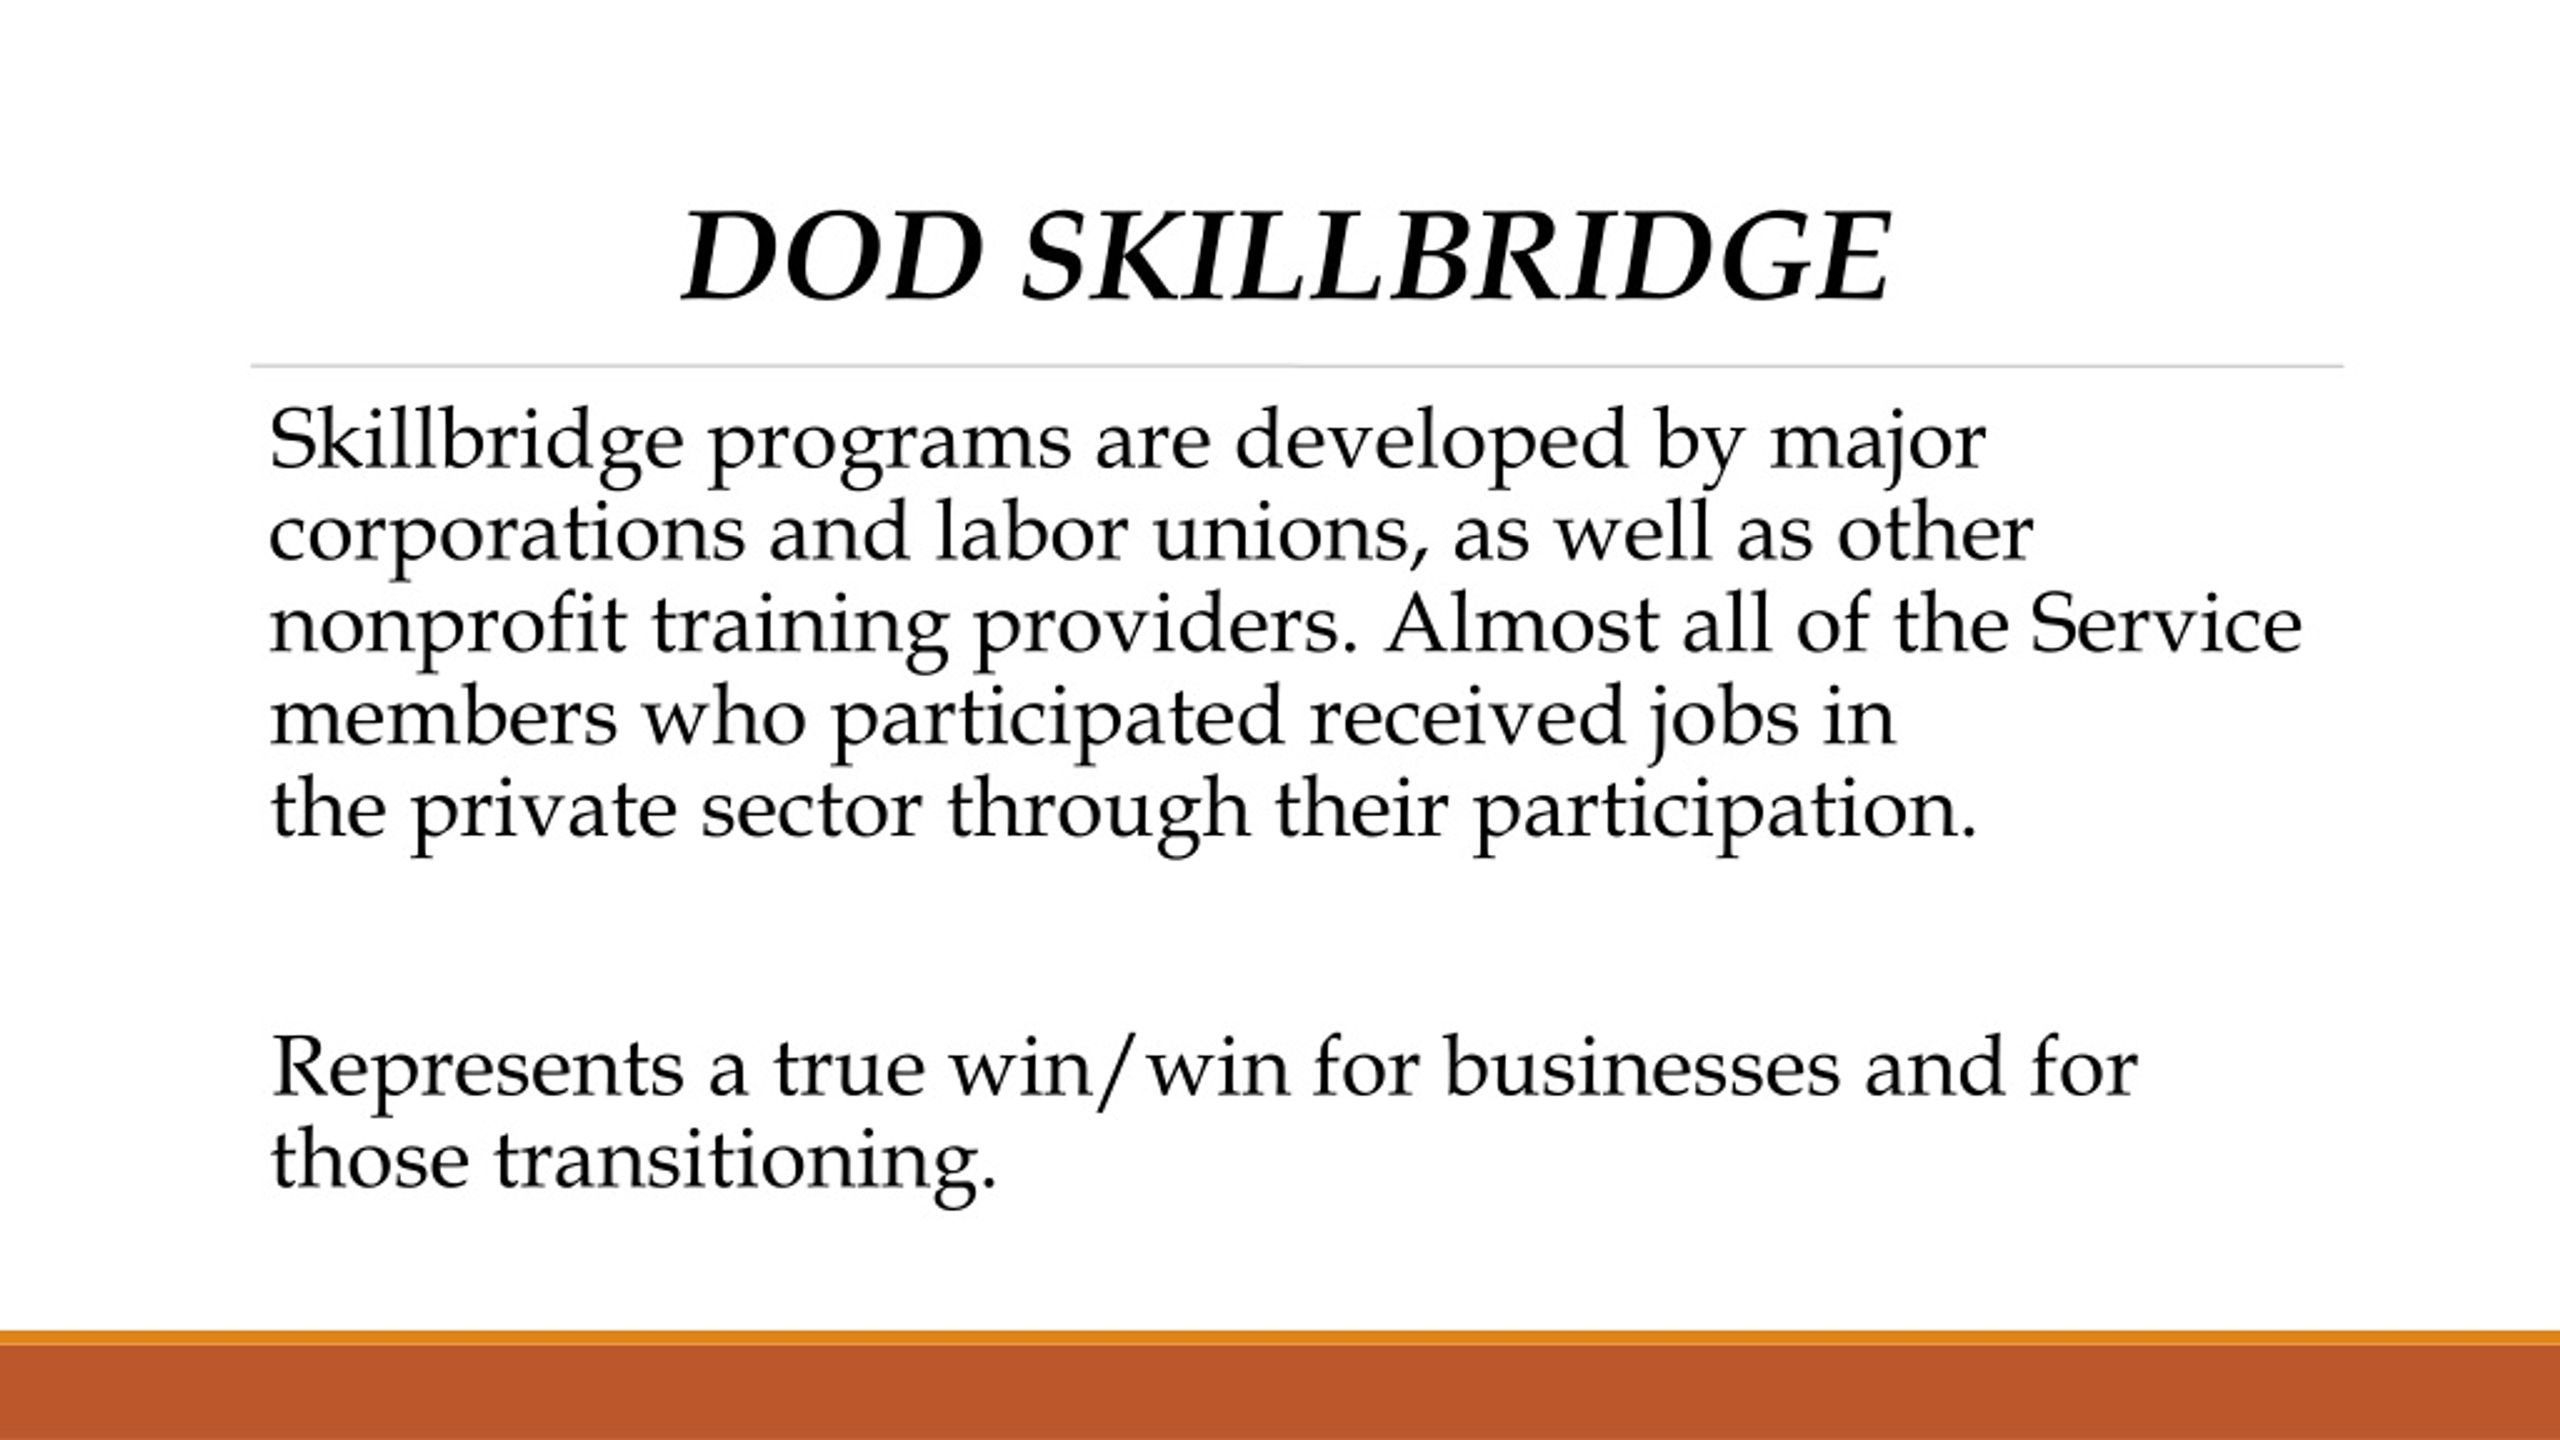 PPT 12 DOD SKILLBRIDGE PowerPoint Presentation, free download ID